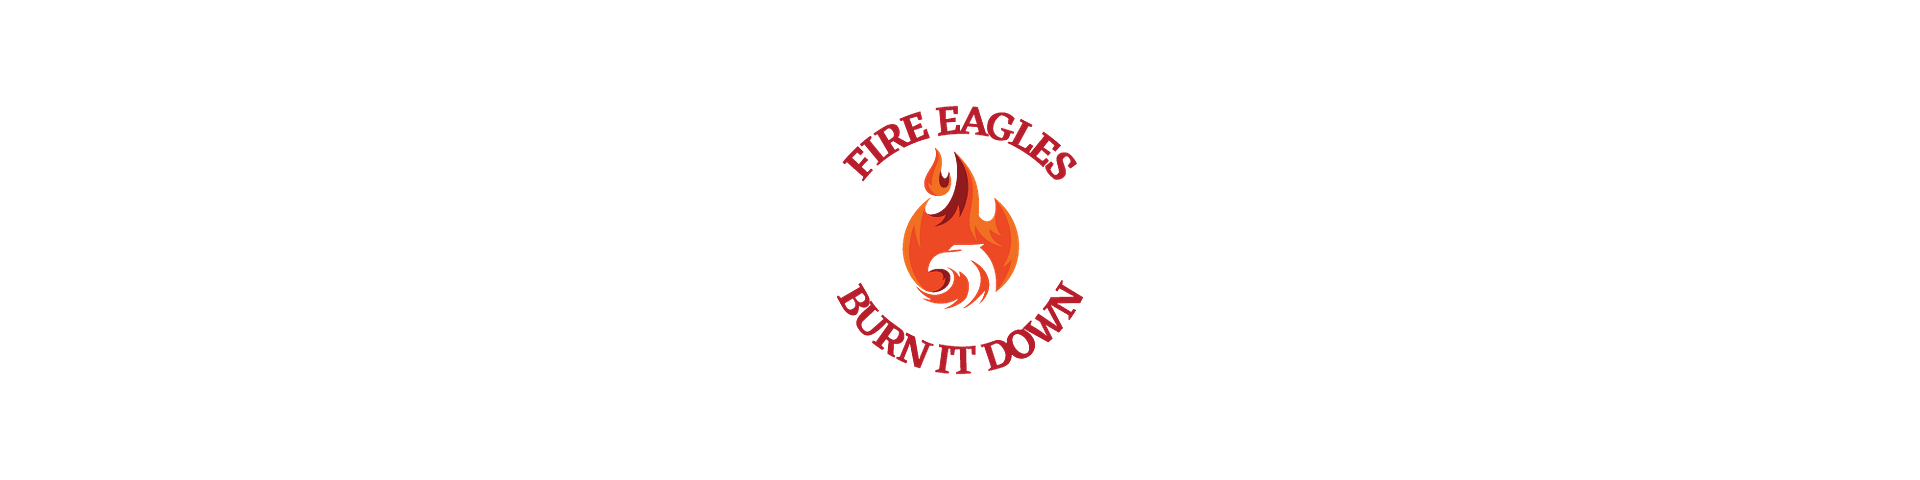 619th Fire Eagles S4 2022